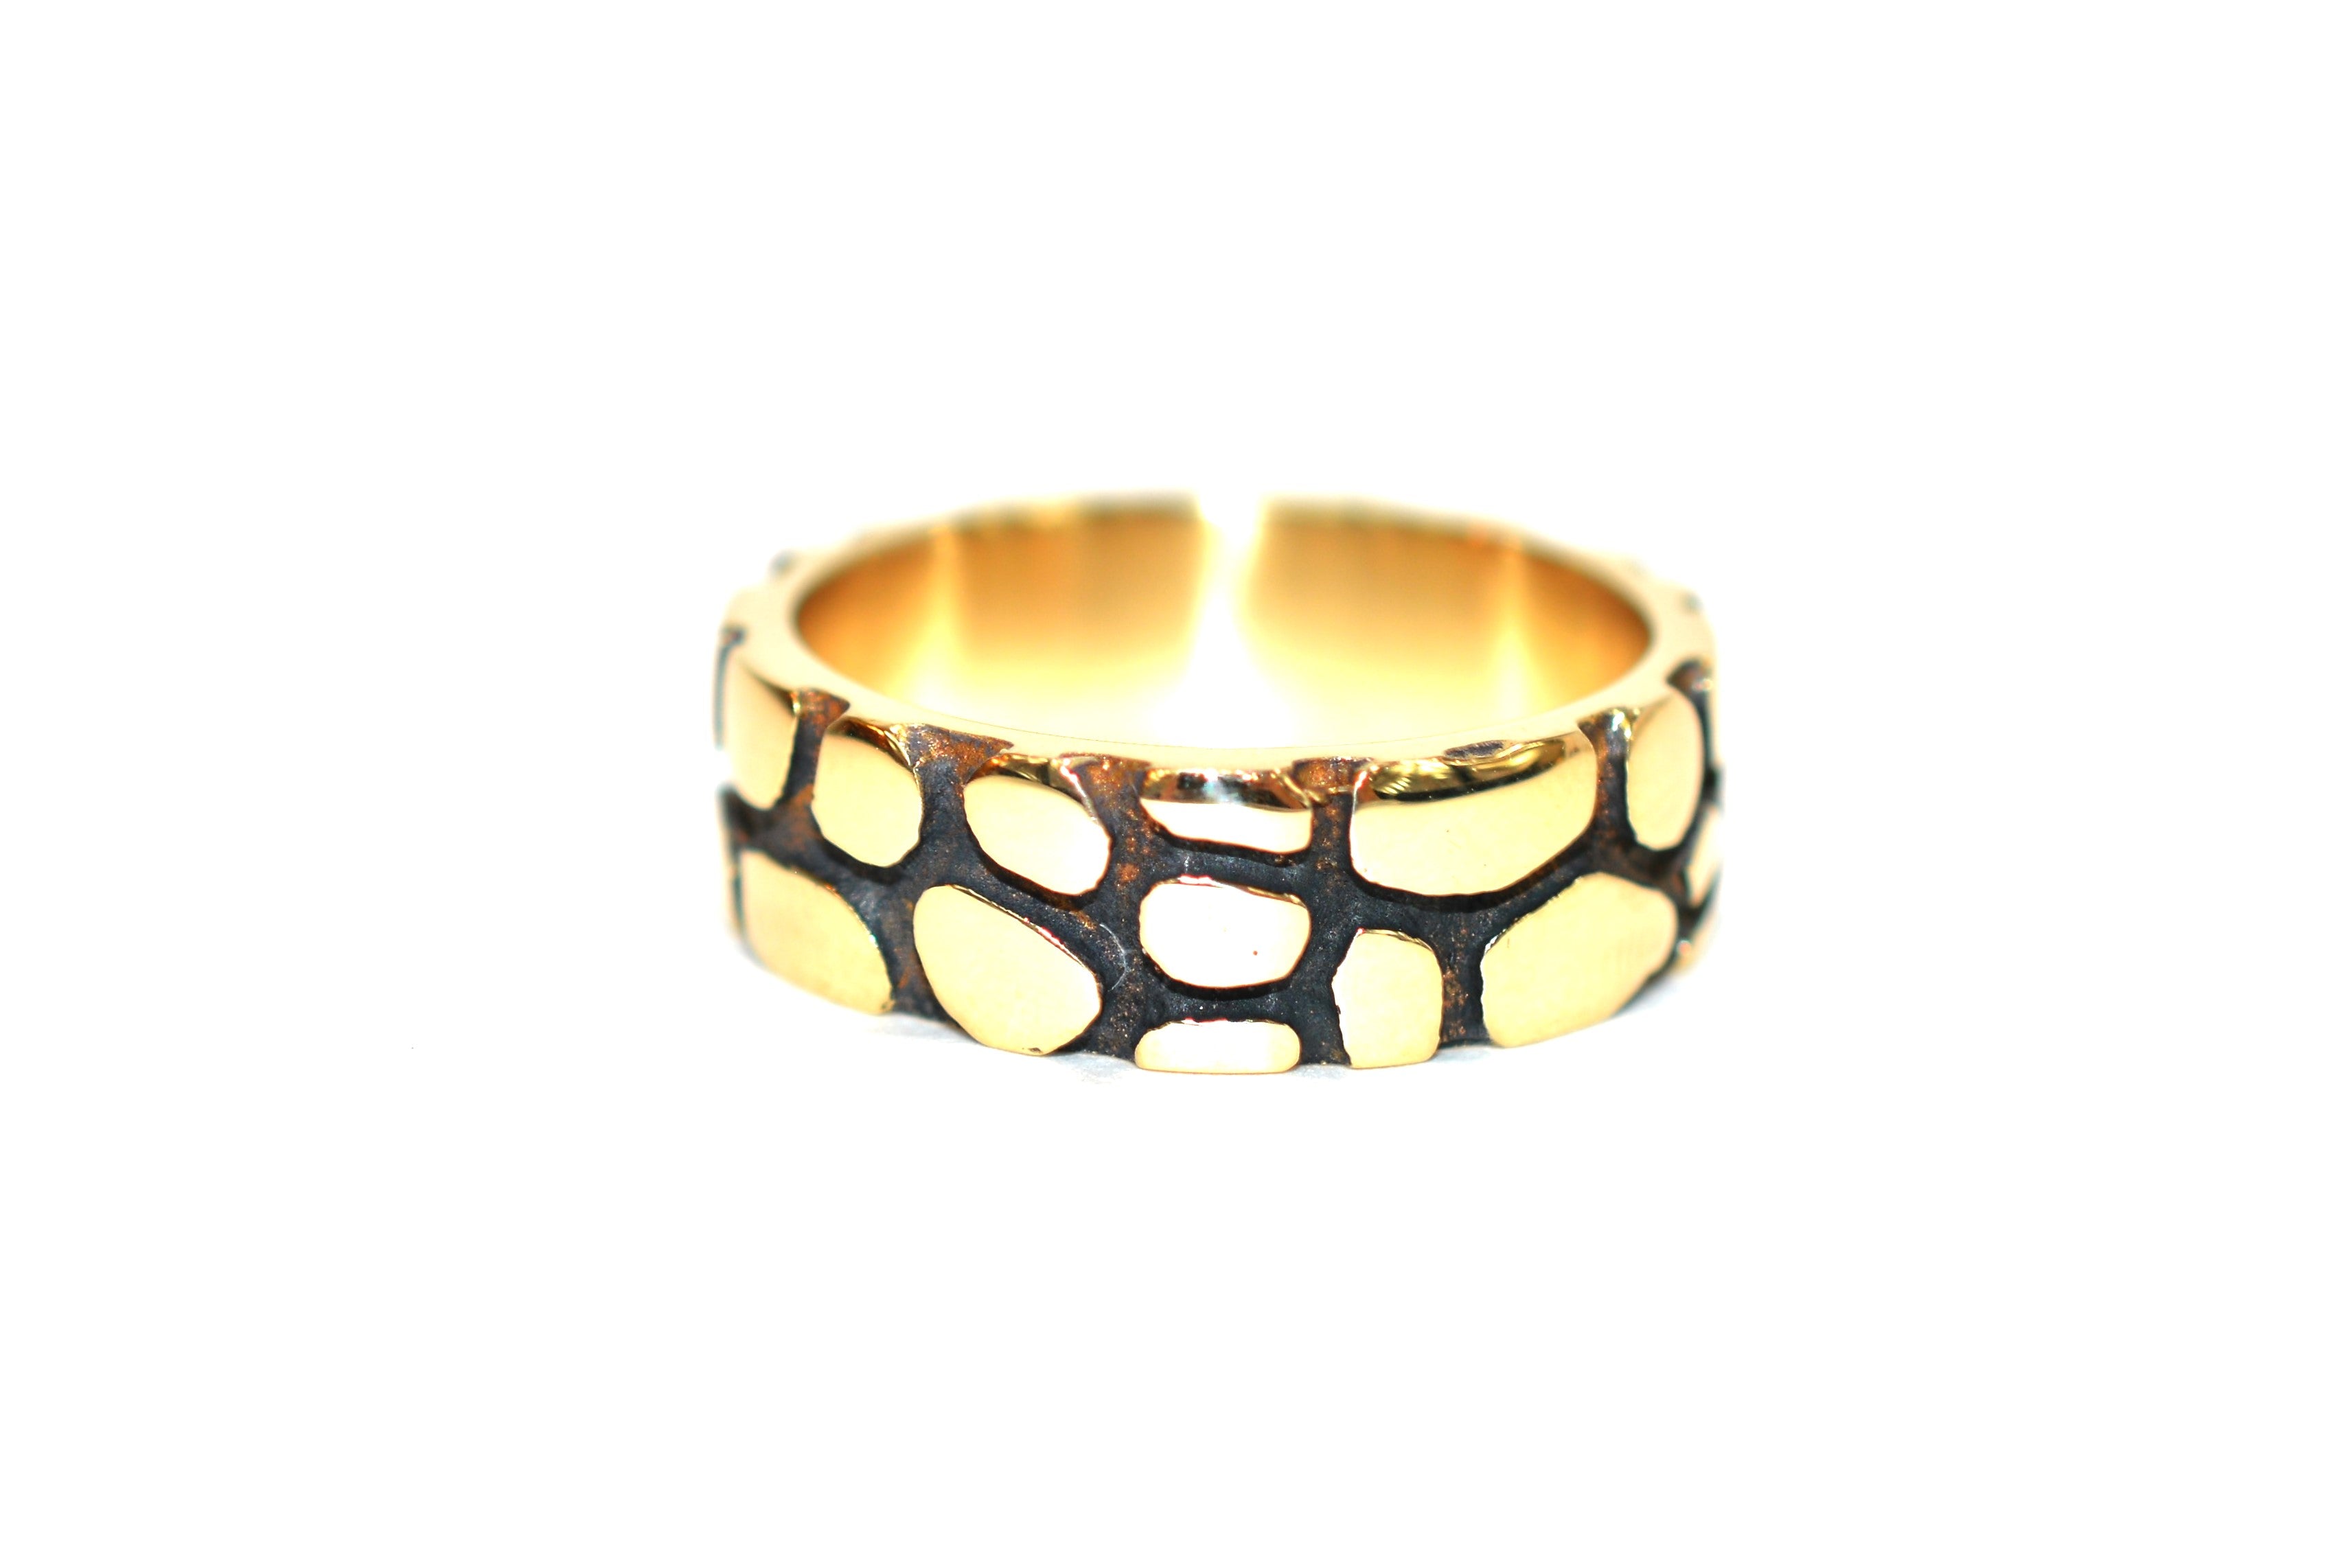 14K Solid Gold Ring Band Ring Wedding Ring Wedding Band Mens Ring Mens Band Black Rhodium Gold Bridal Jewelry Stackable Ring Vintage Ring